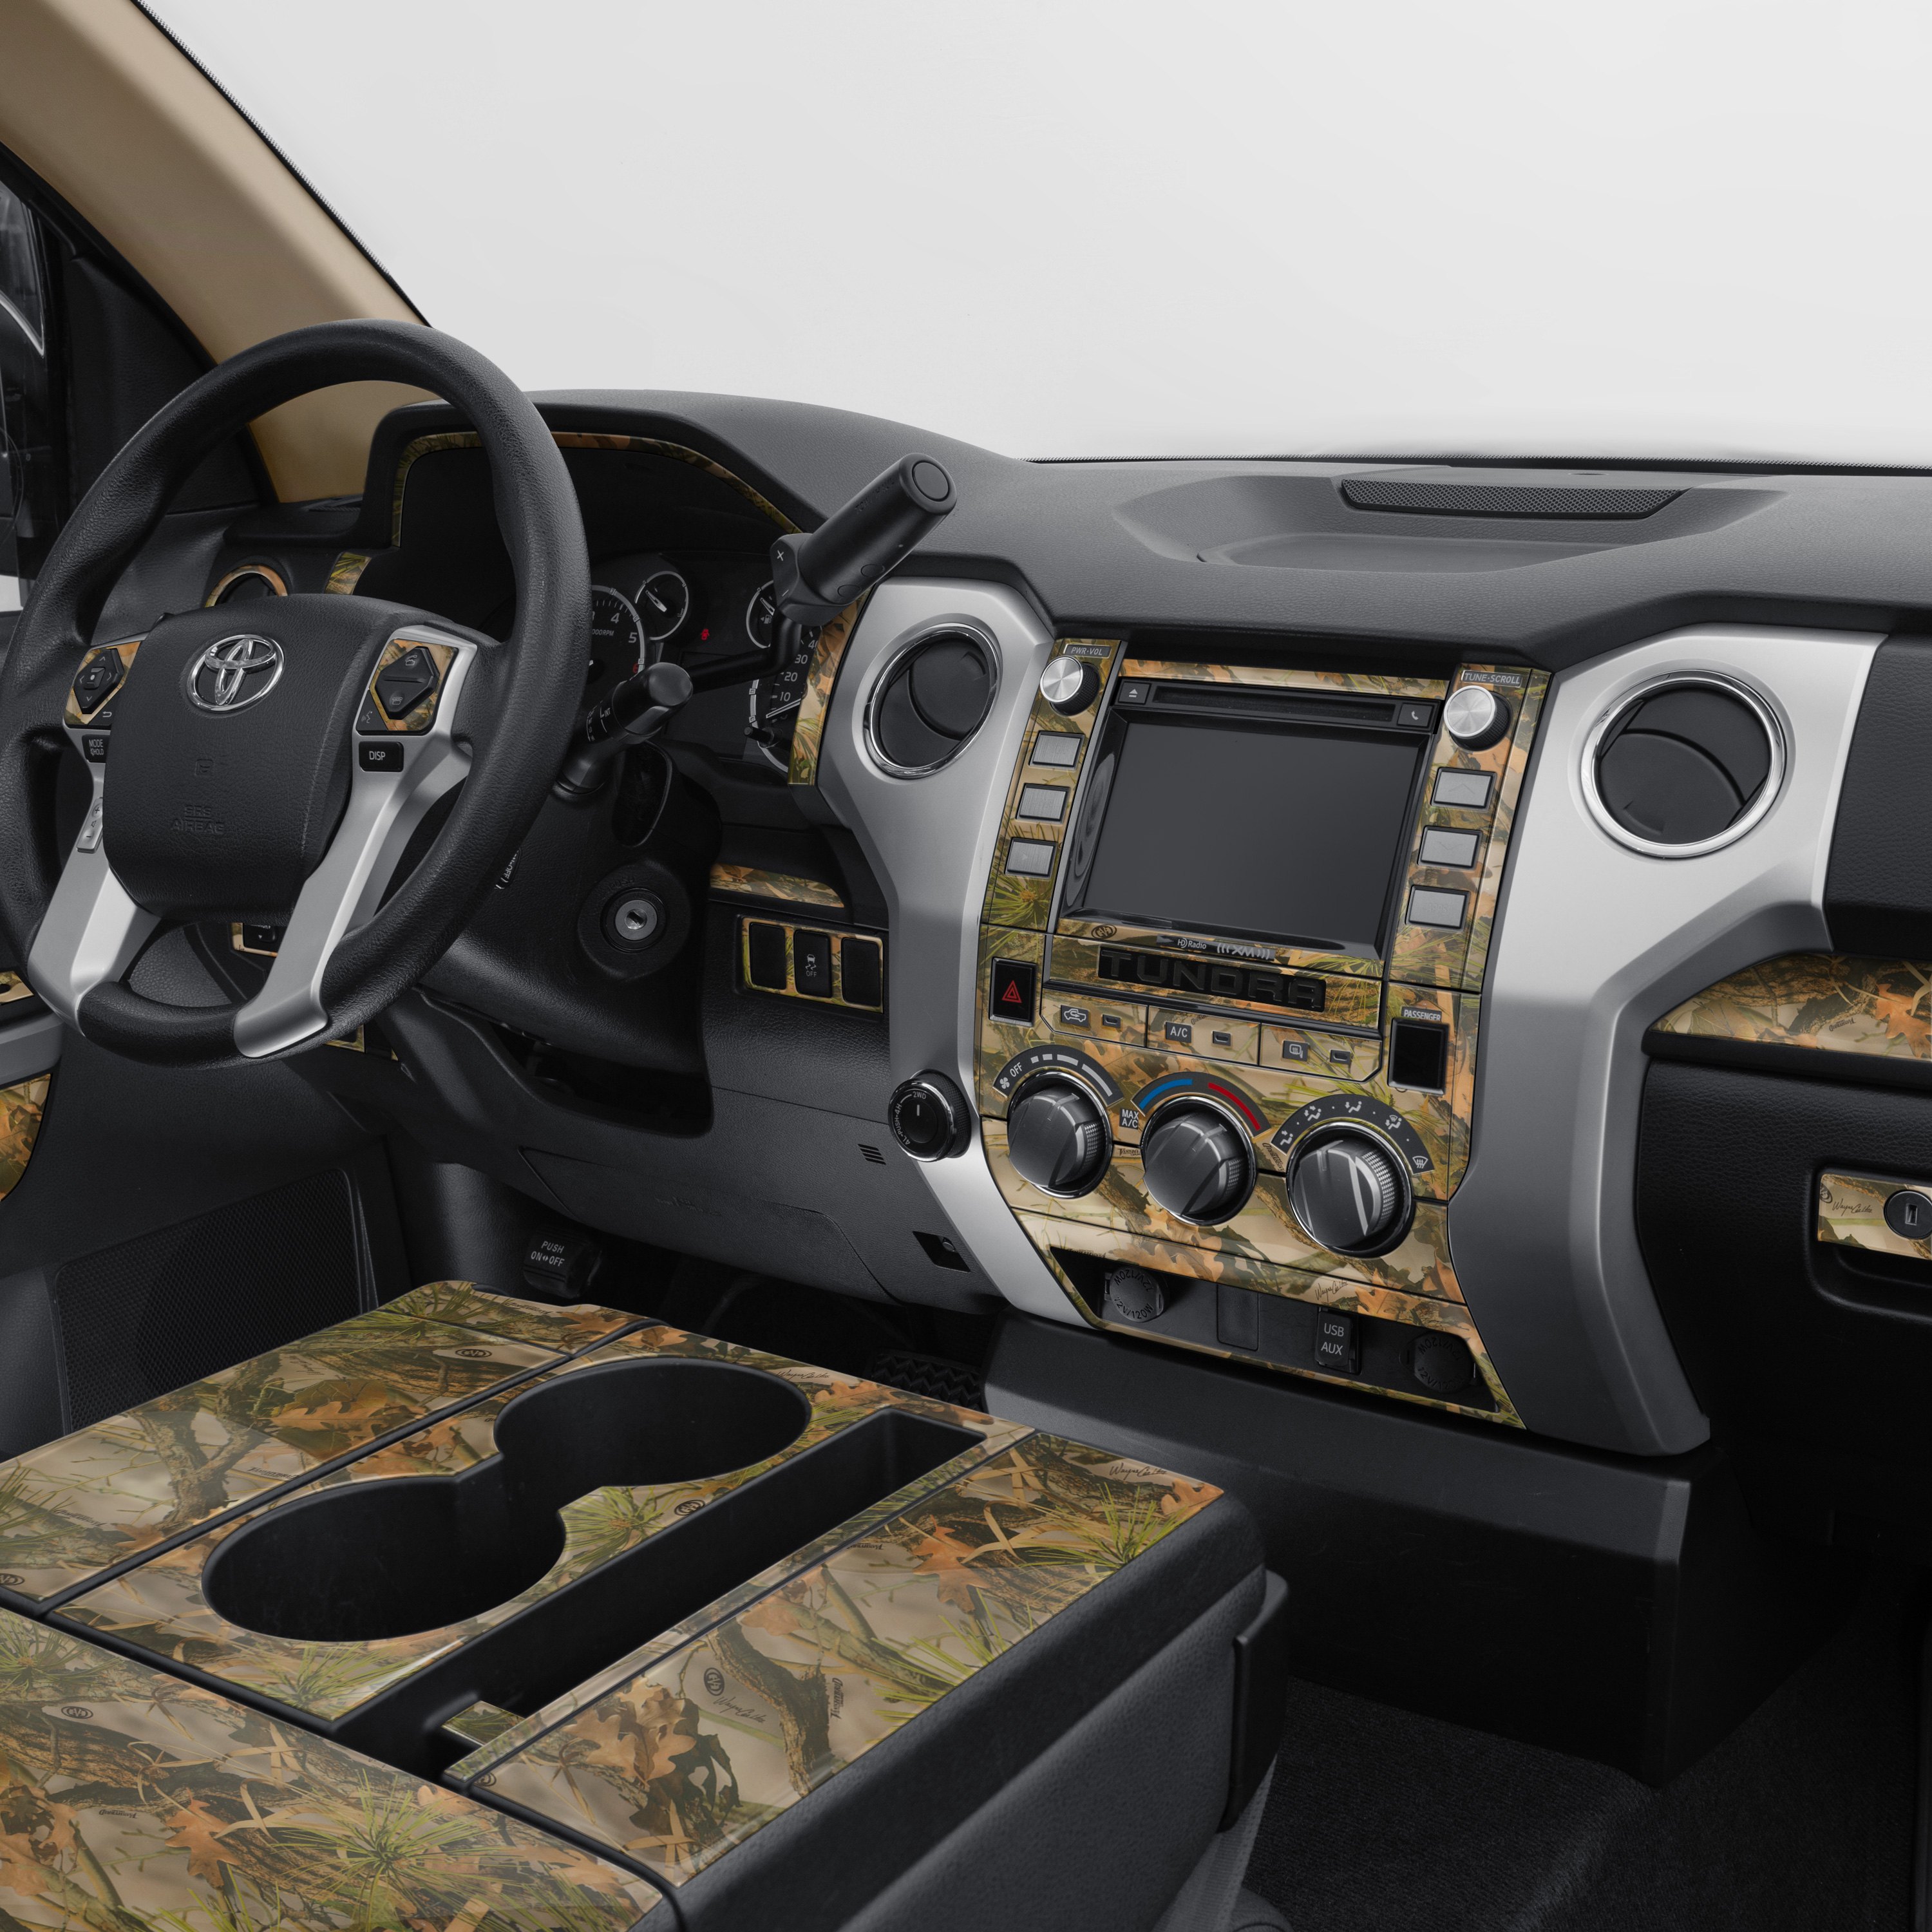 Toyota Tundra Crew CAB Interior BURL Wood Dash Trim KIT Set 2014 2015 2016 2017 2018 